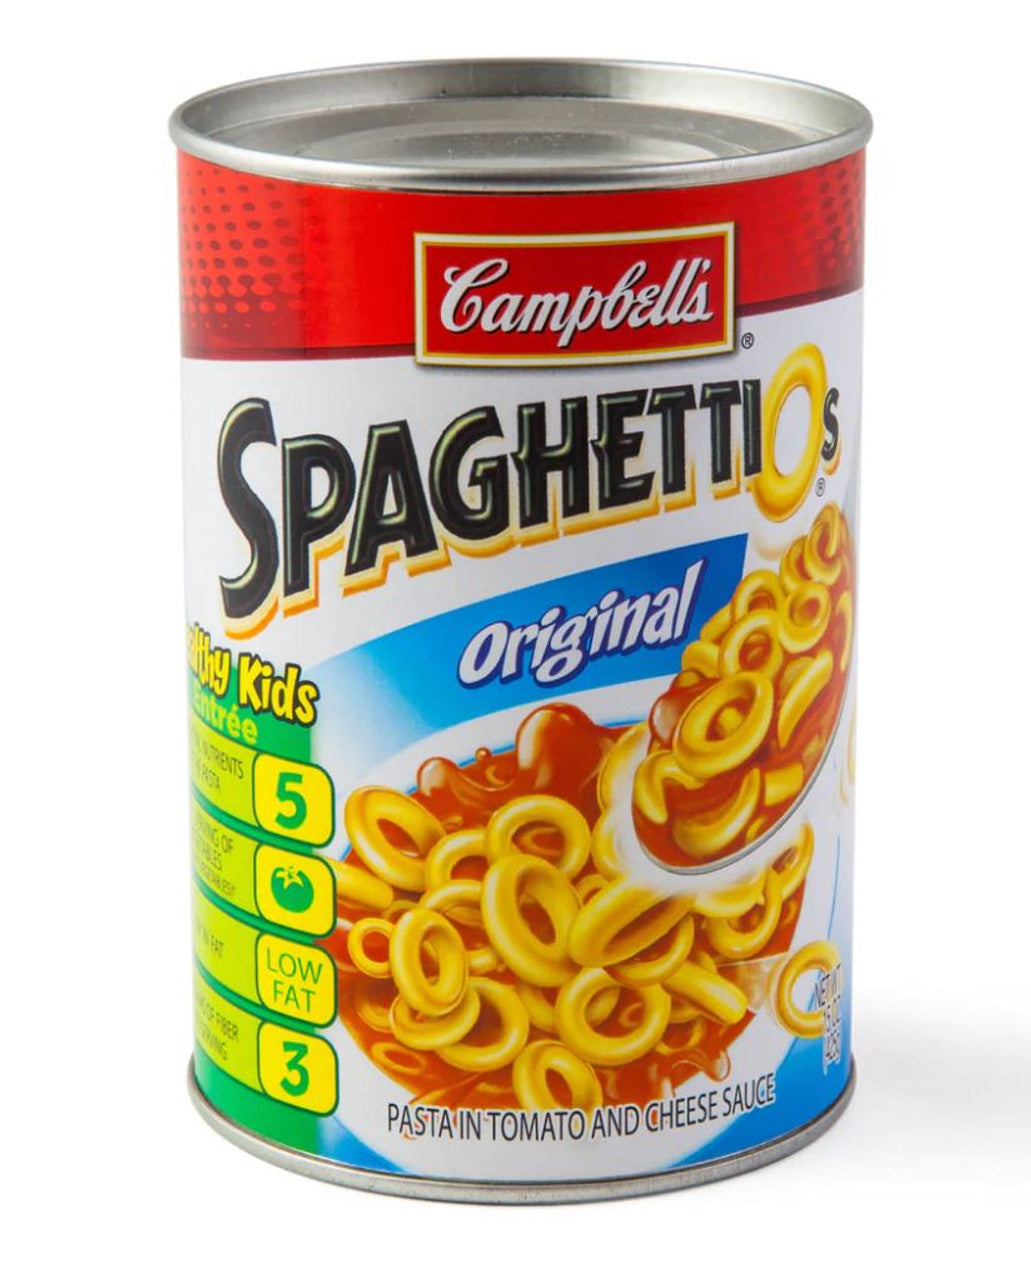 SpaghettiOs Can Safe